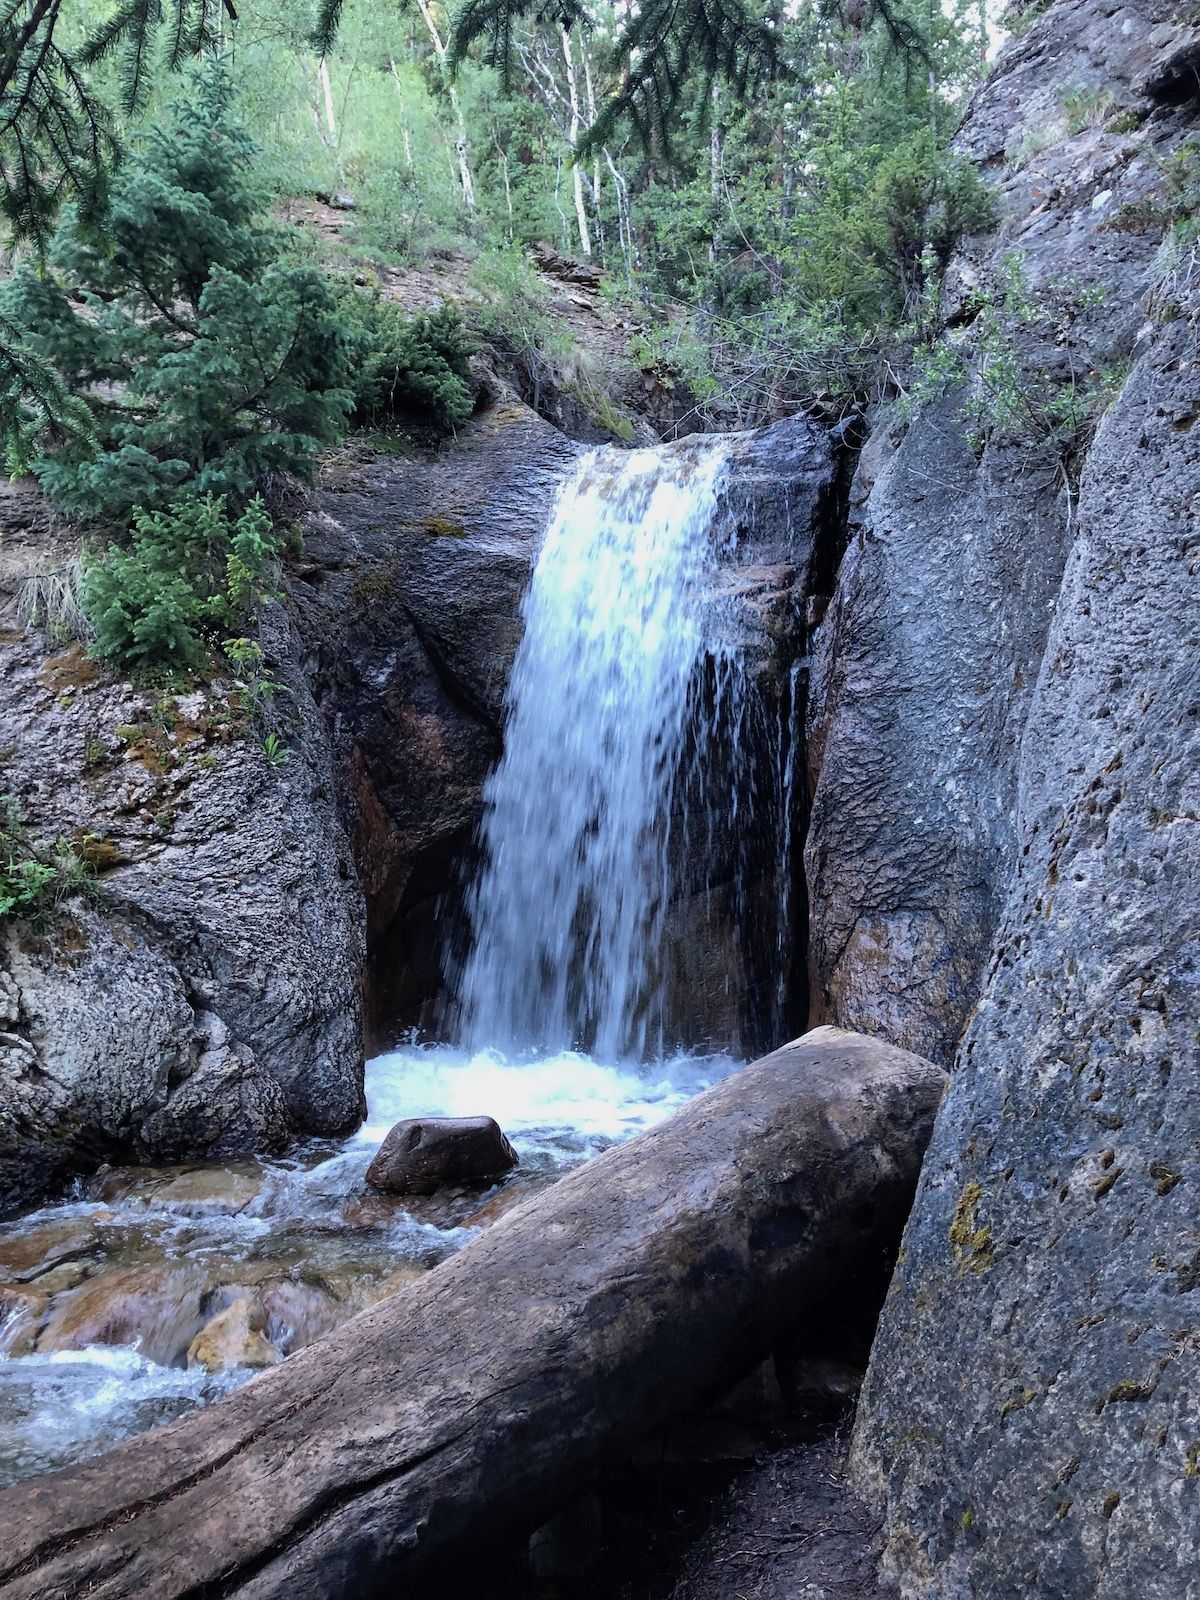 A waterfall on the climb up to Kokomo pass.